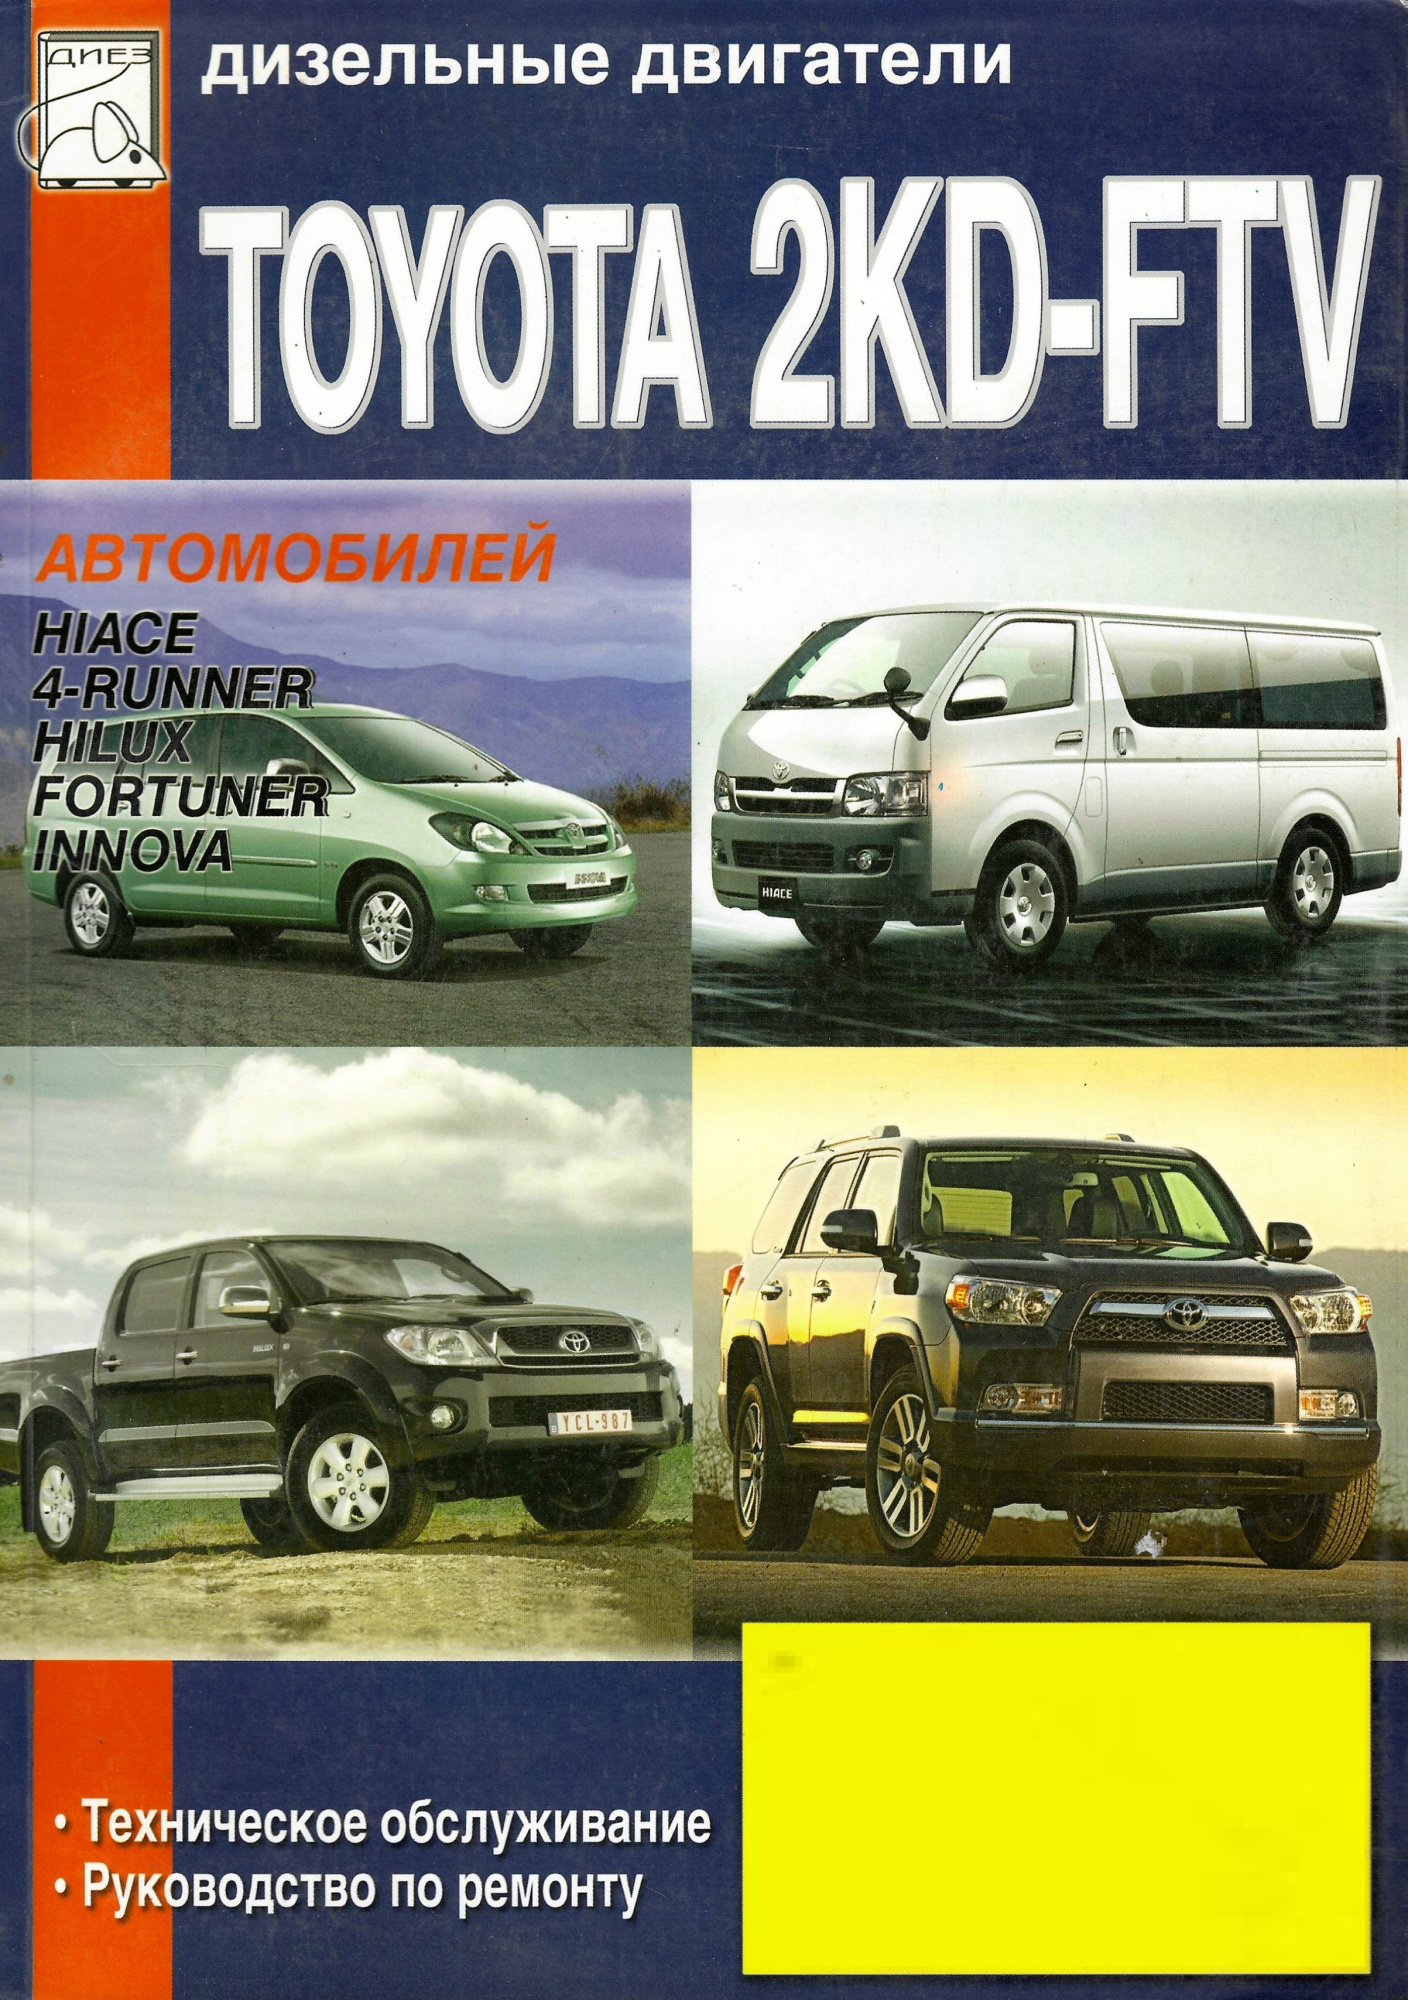 Toyota 2KD-FTV для Hiace, 4-Runner, Hilux, Fortuner, Innova. Книга по ремонту и ТО. Диез